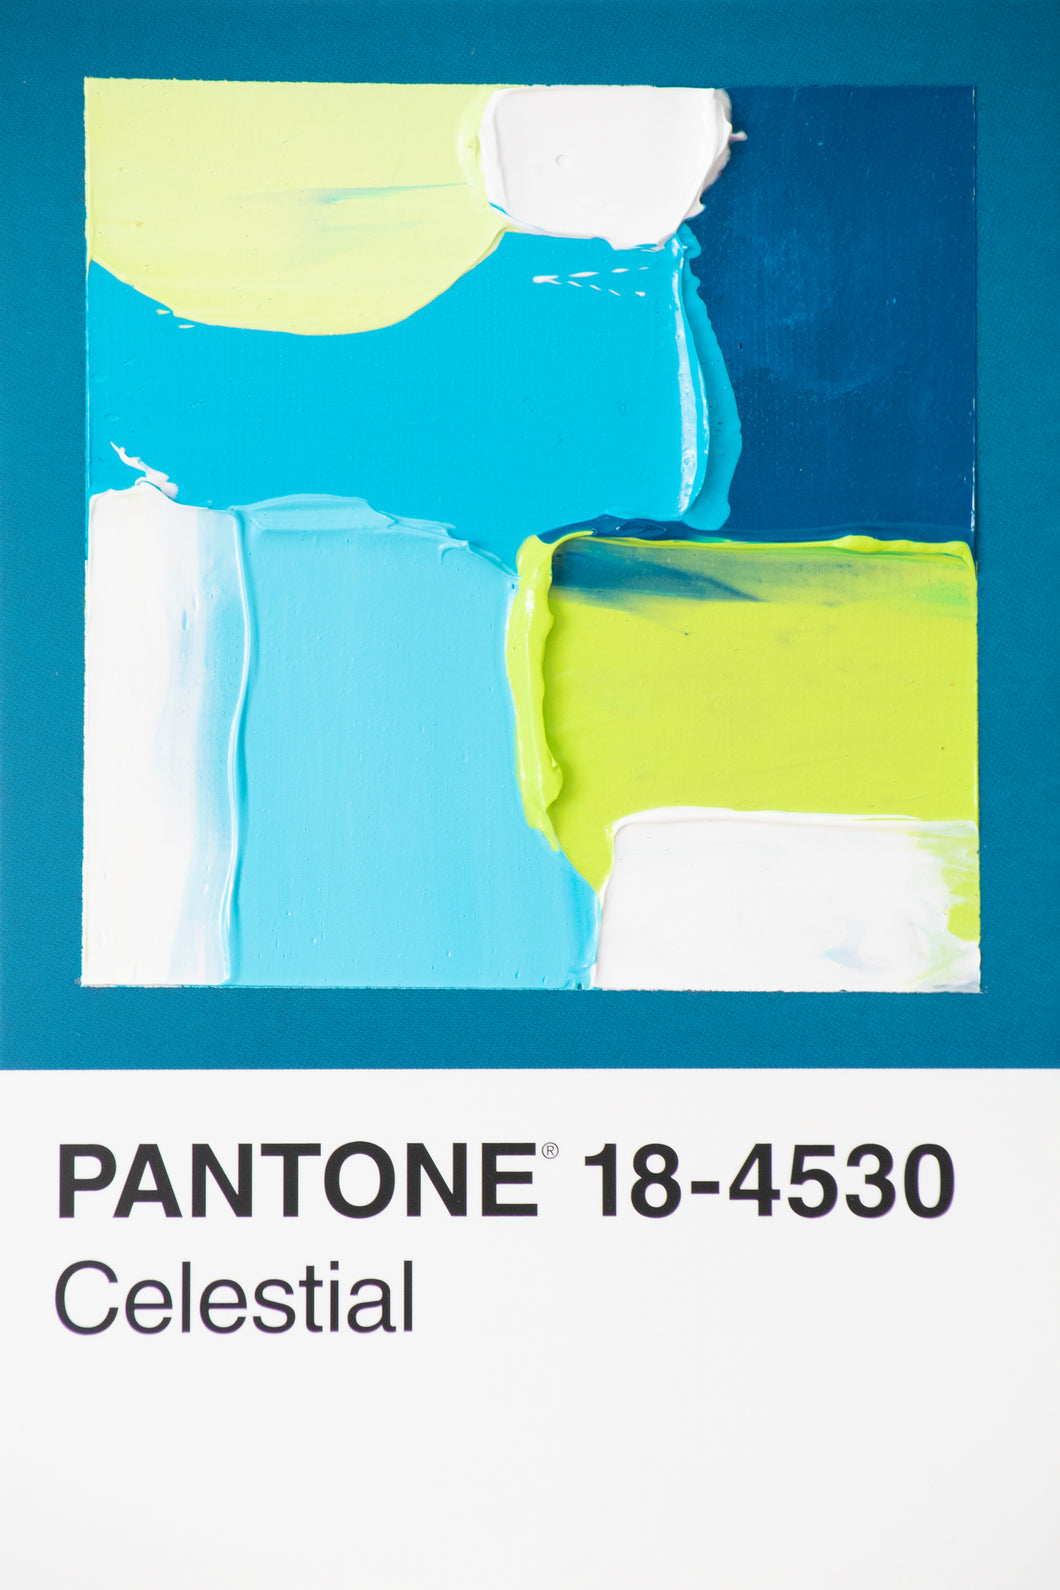 Pantone 18-4530 Celestial